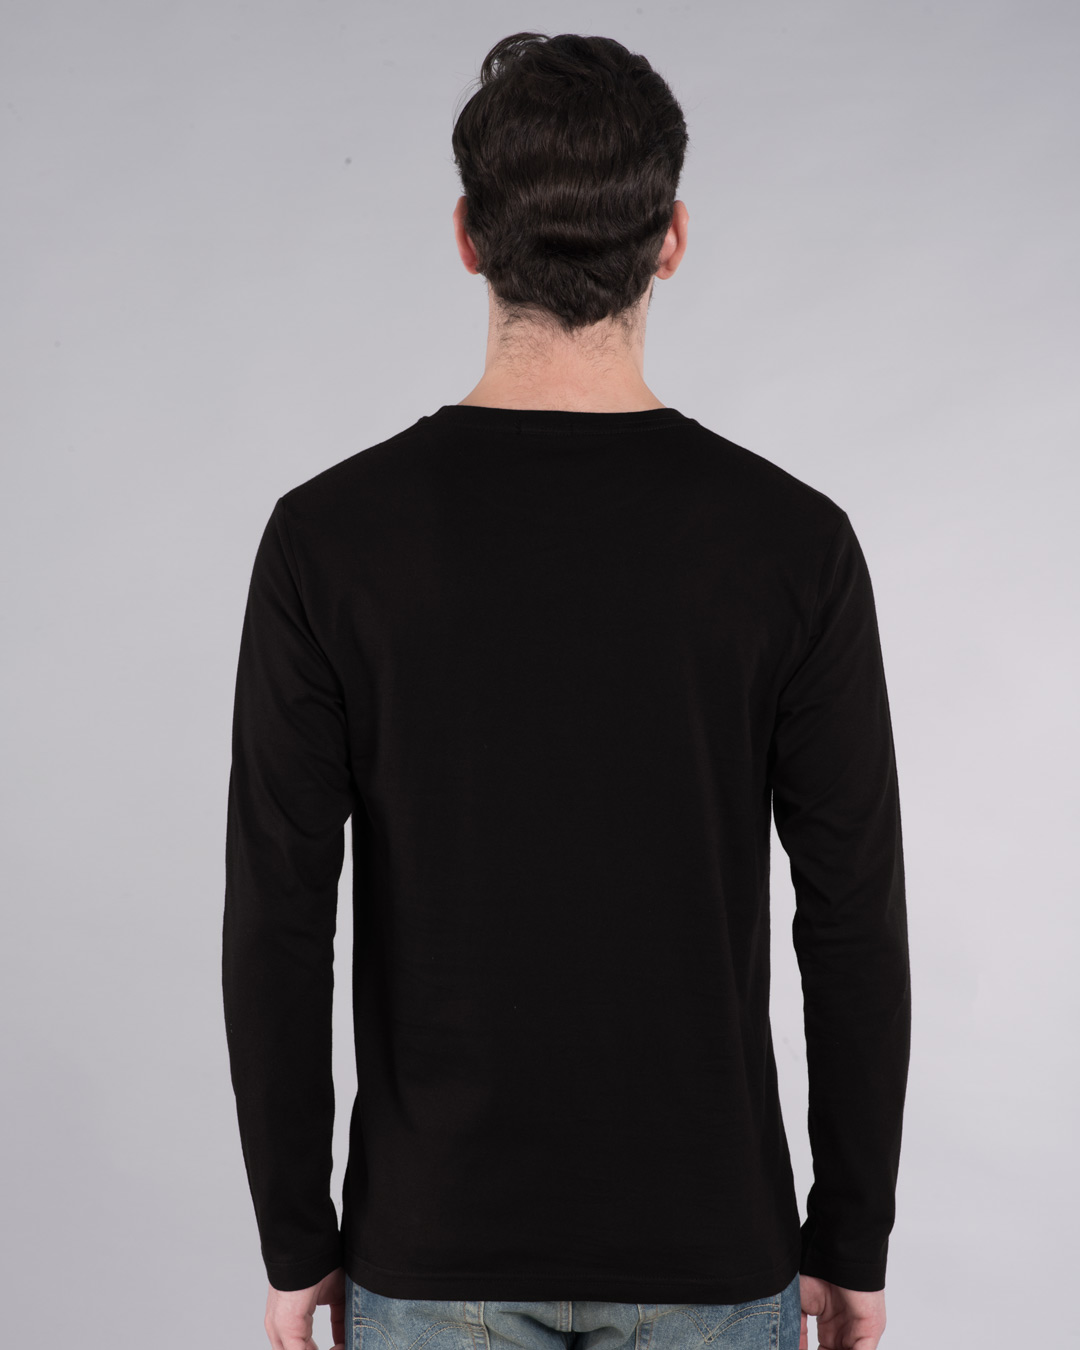 Shop Dali Profile Glow In Dark Full Sleeve T-Shirt -Back